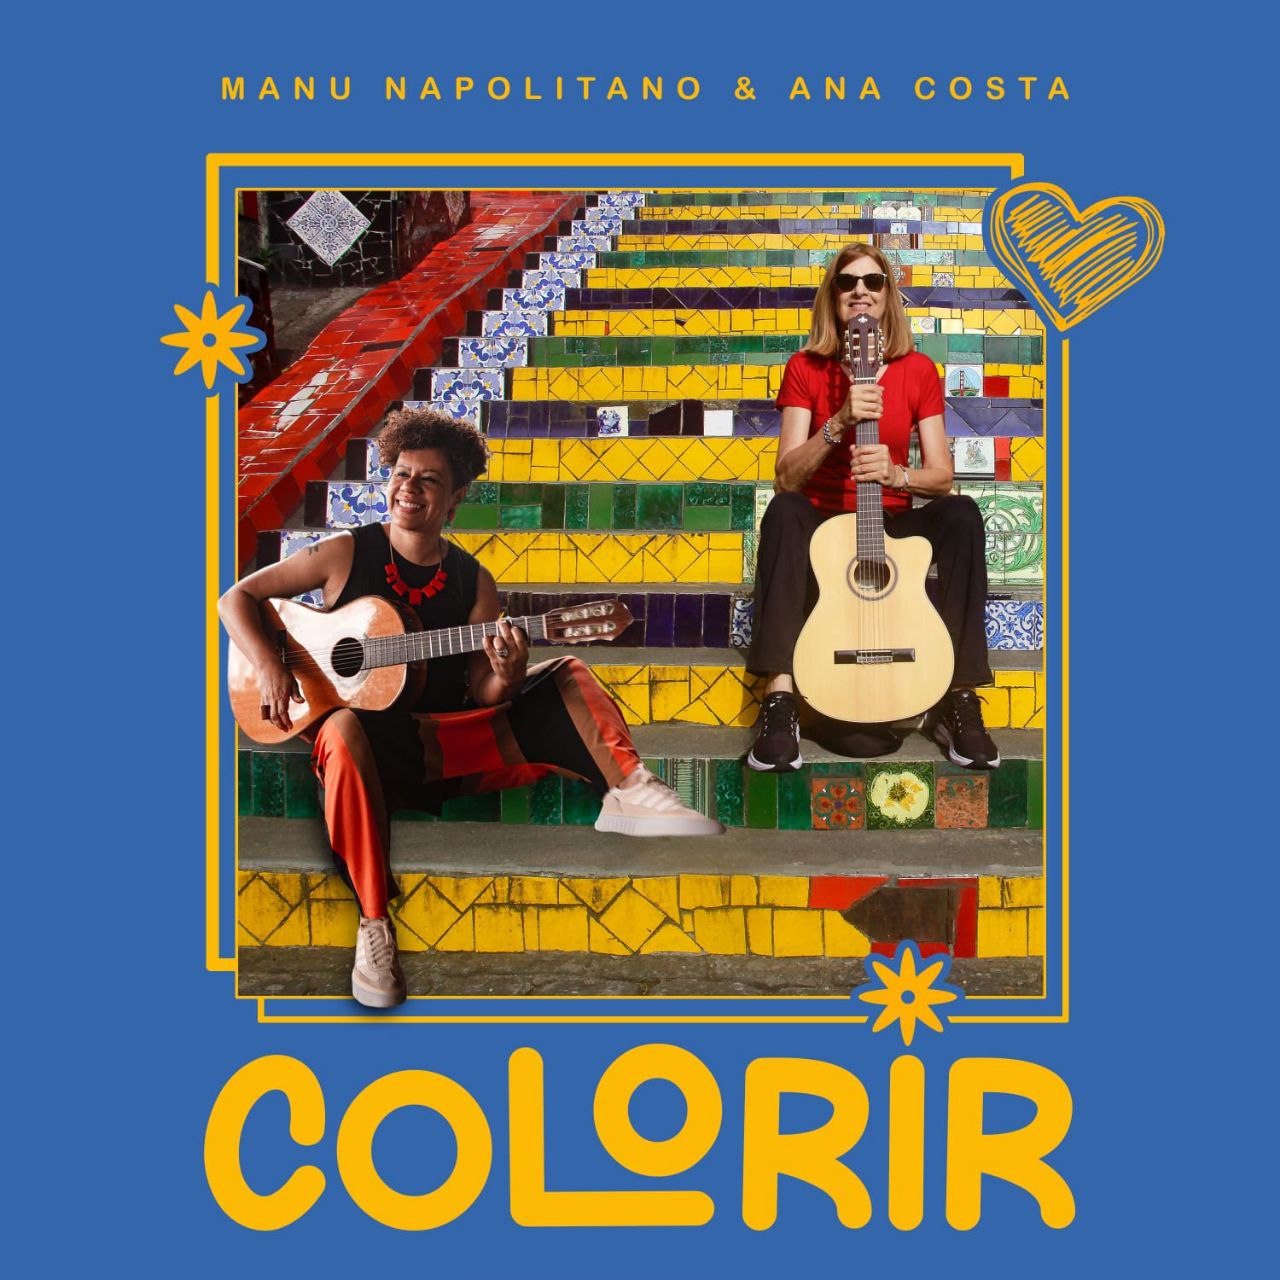 Manu Napolitano e Ana Costa lançam o EP ‘Colorir’, unindo as artes ítalo-venezuelana e brasileira